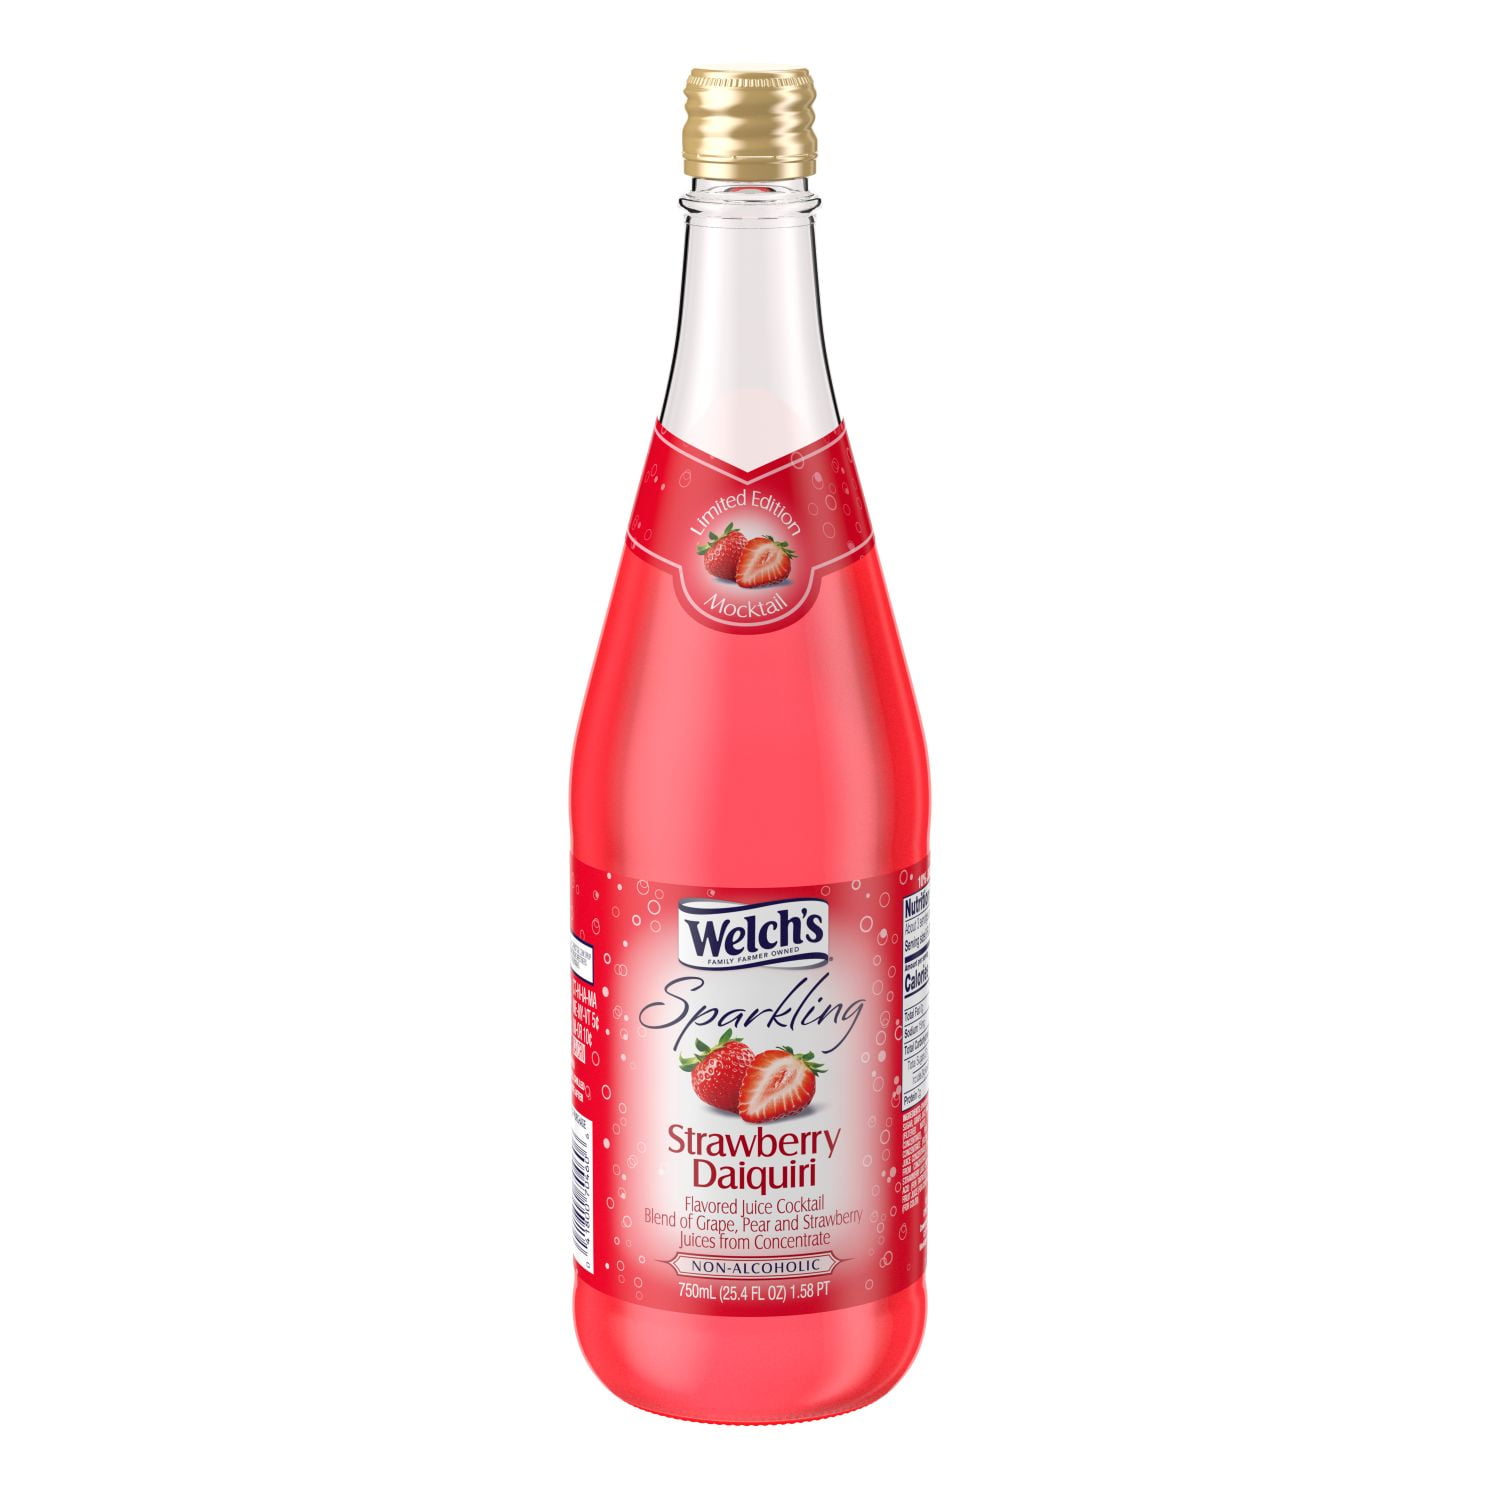 Welch's Non-Alcoholic Sparkling Strawberry Daiquiri Juice Cocktail, 25.4 fl oz Bottle